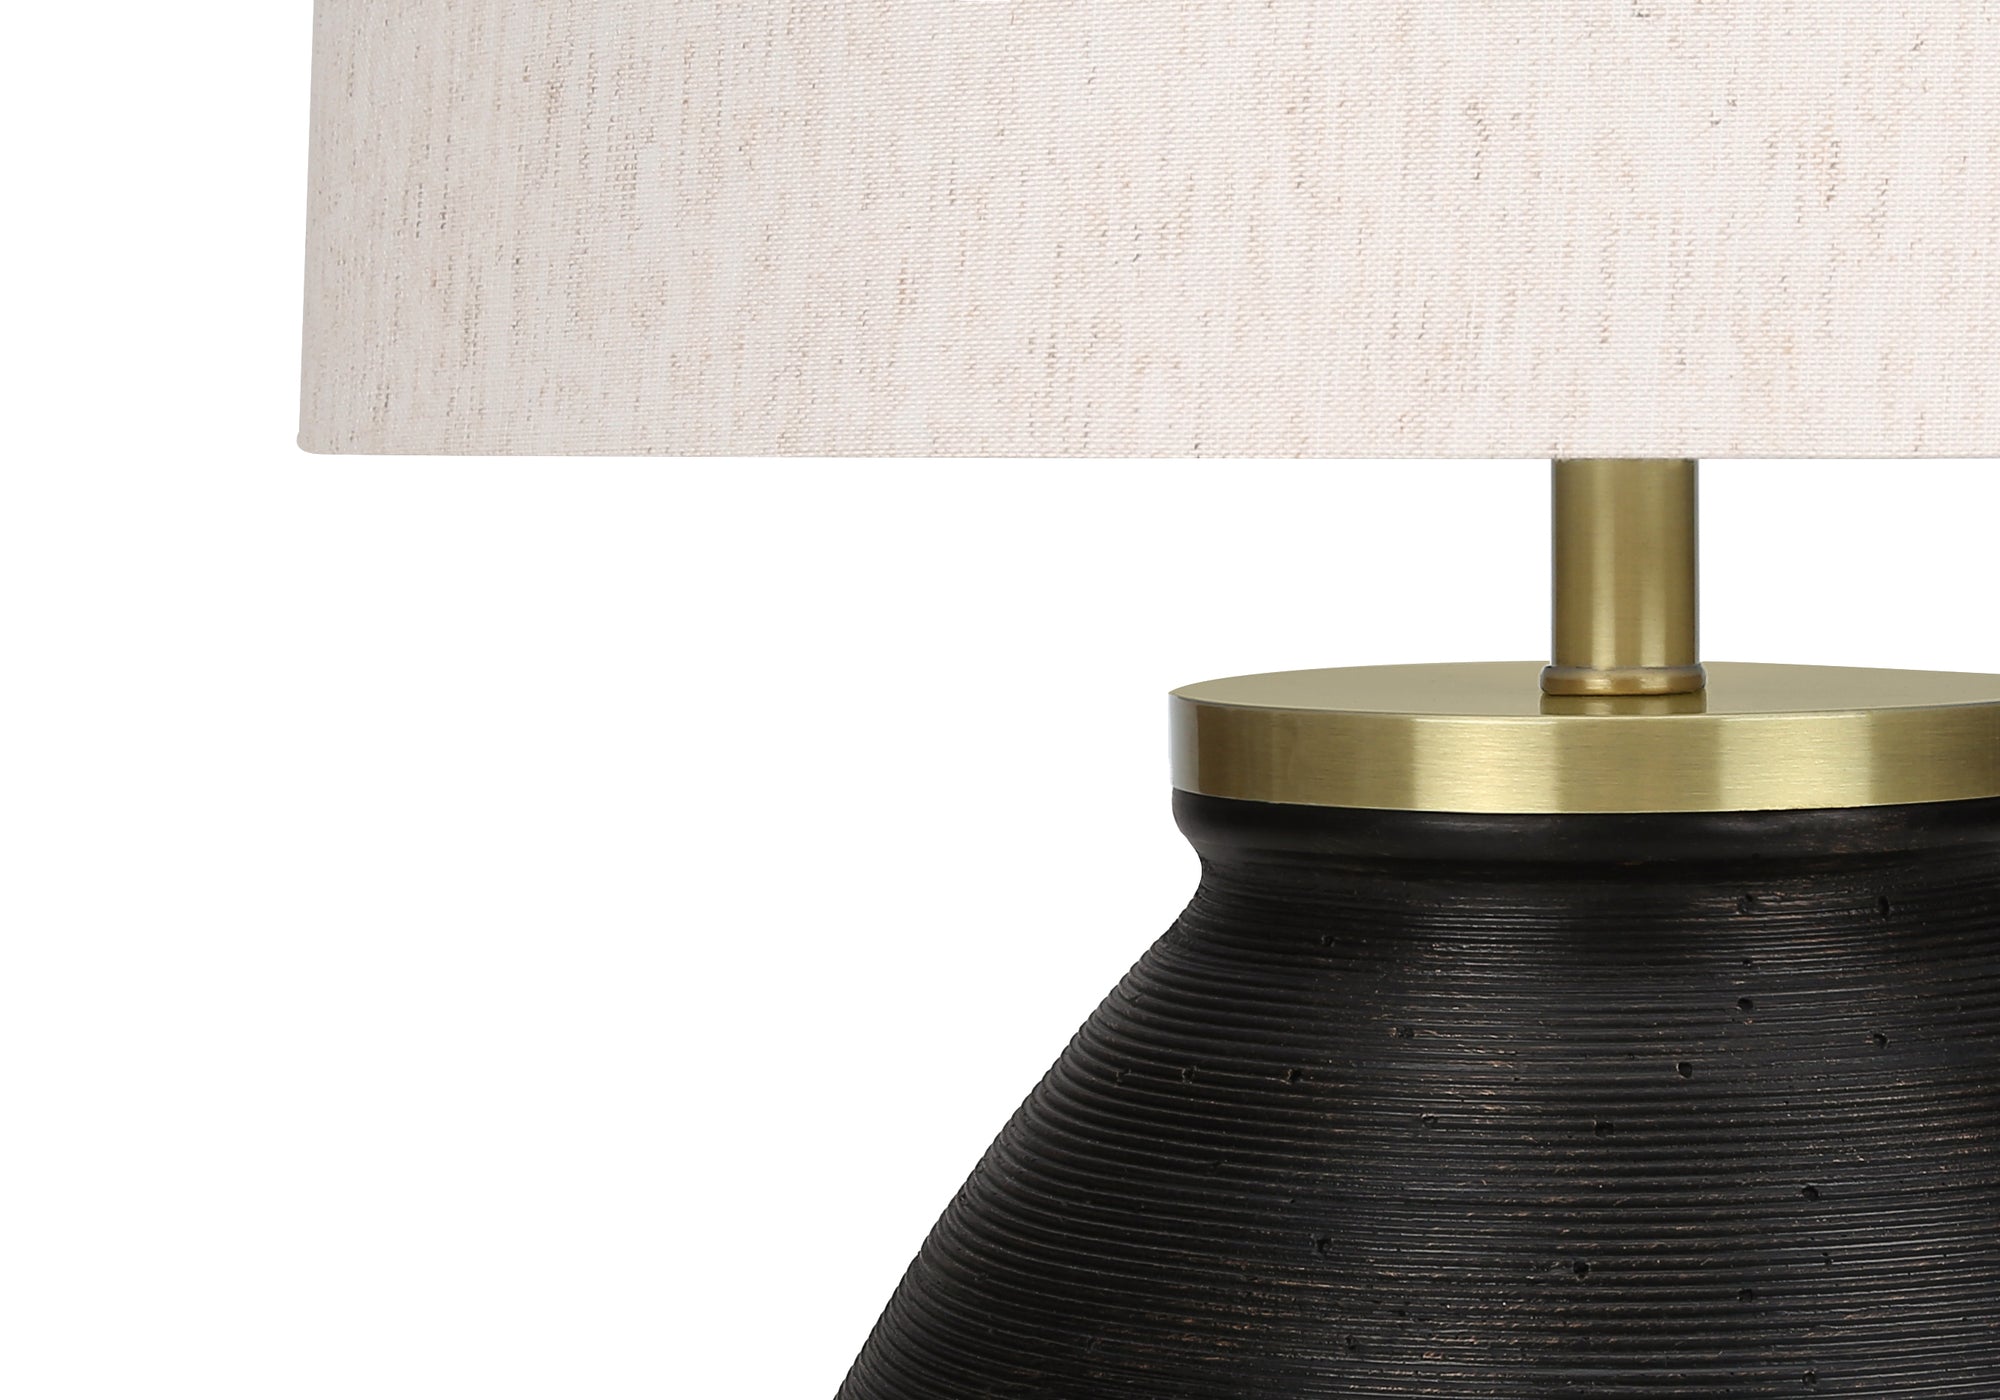 MN-499715    Lighting, 25"H, Table Lamp, Black Concrete, Ivory / Cream Shade, Contemporary